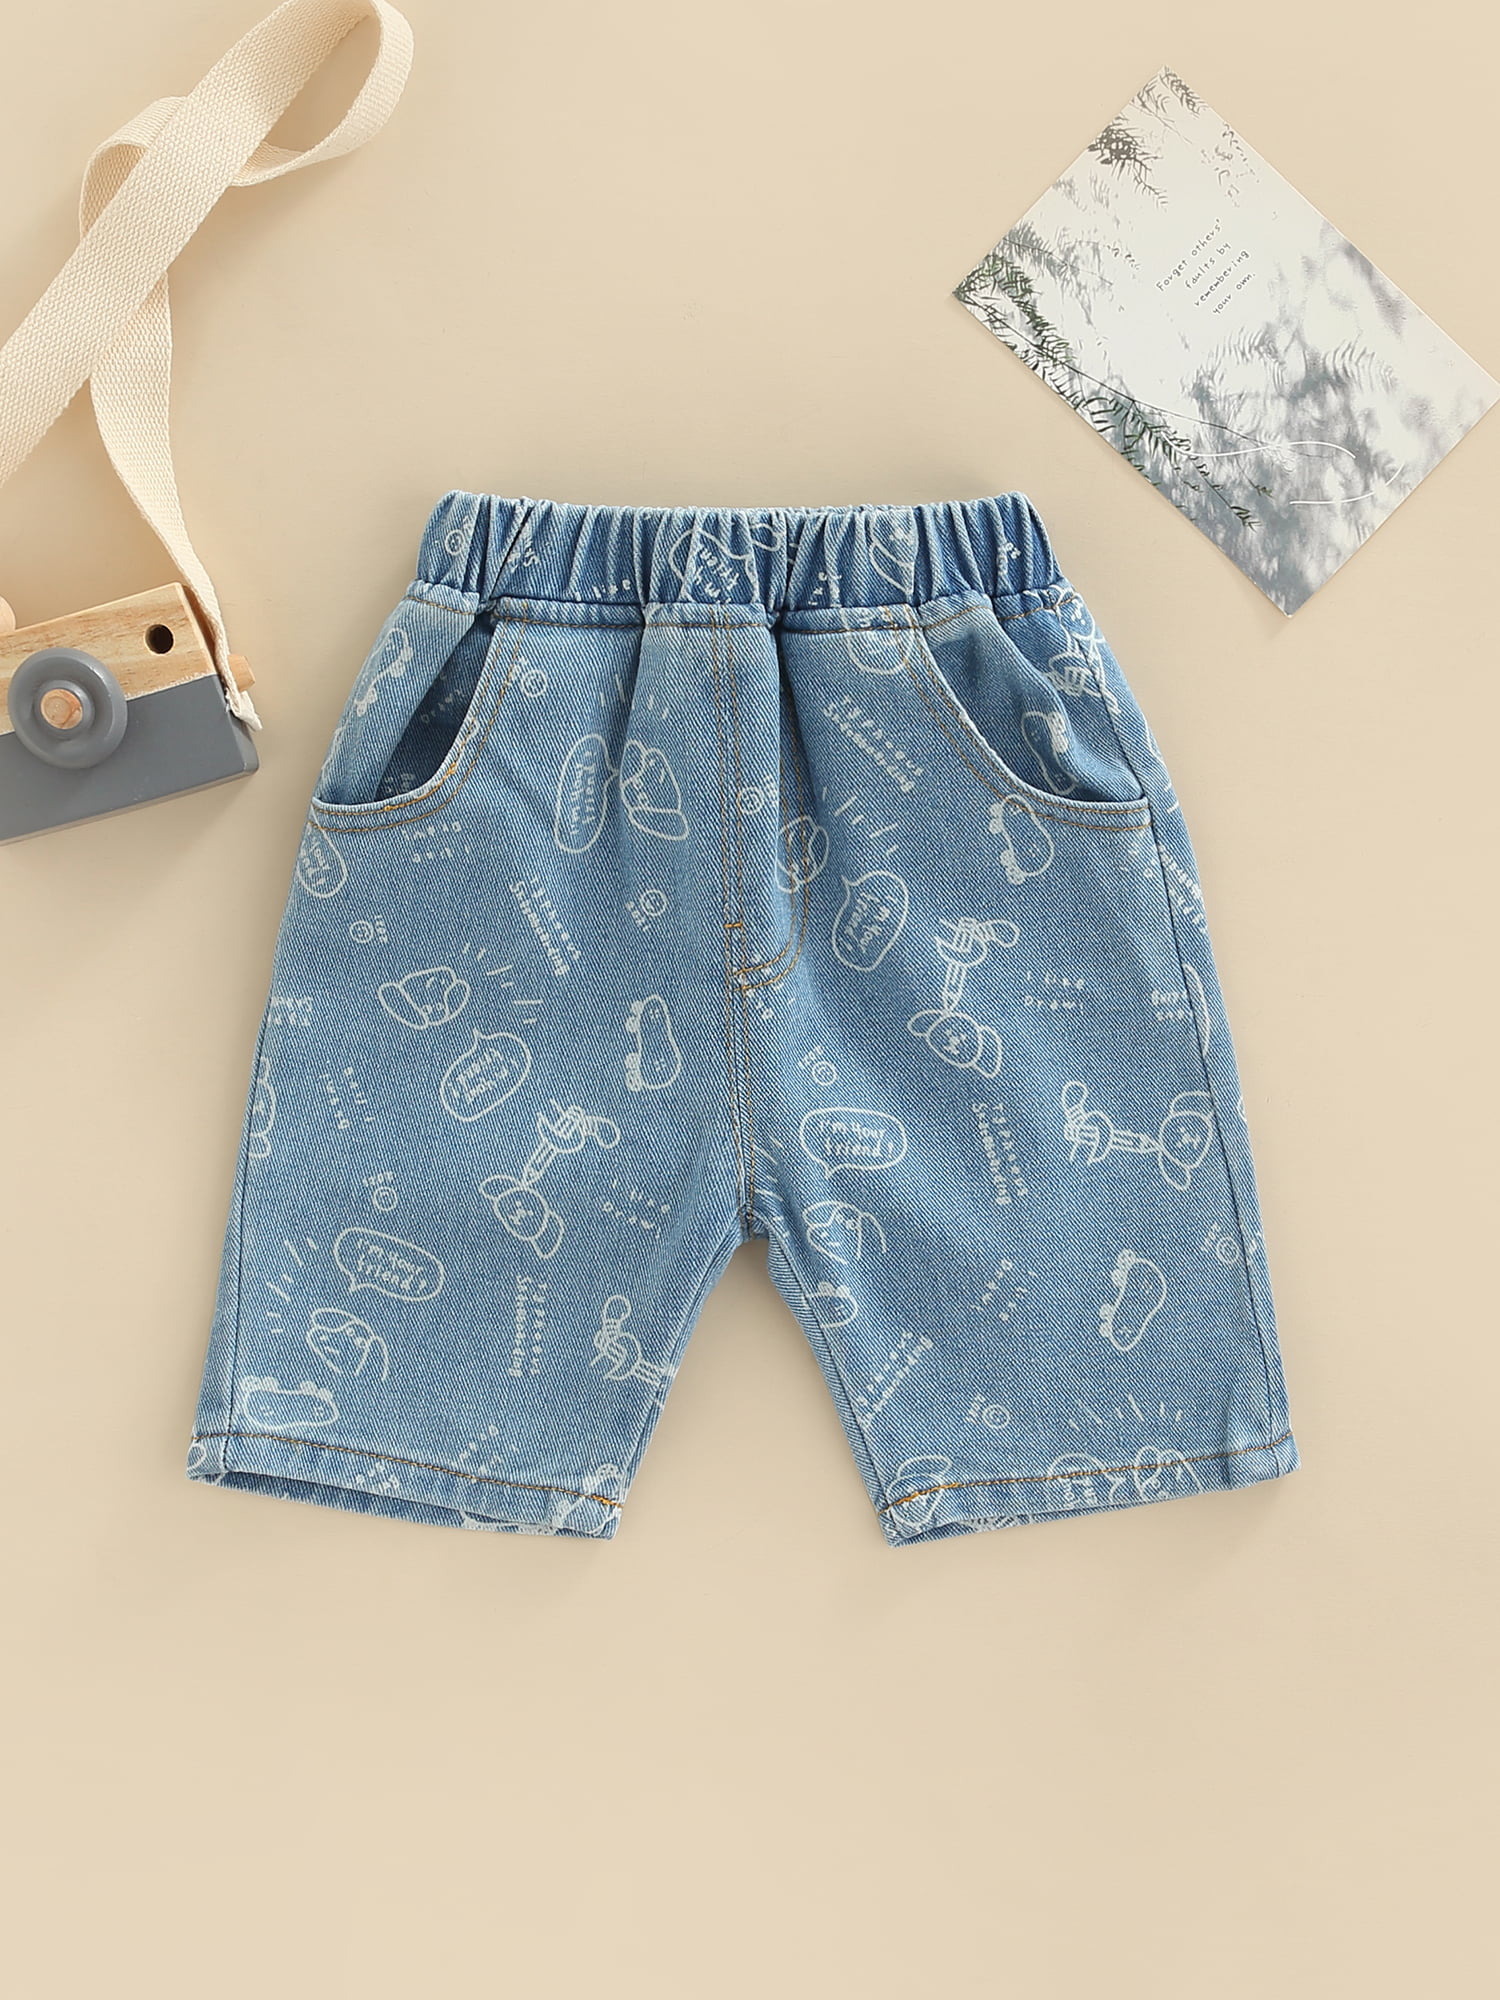 Nokpsedcb Toddlers Kid Boy Denim Shorts Children Elastic Waist Casual  Cartoon Animal Pattern Printed Short Jeans with Pockets Light Blue 4-5  Years 